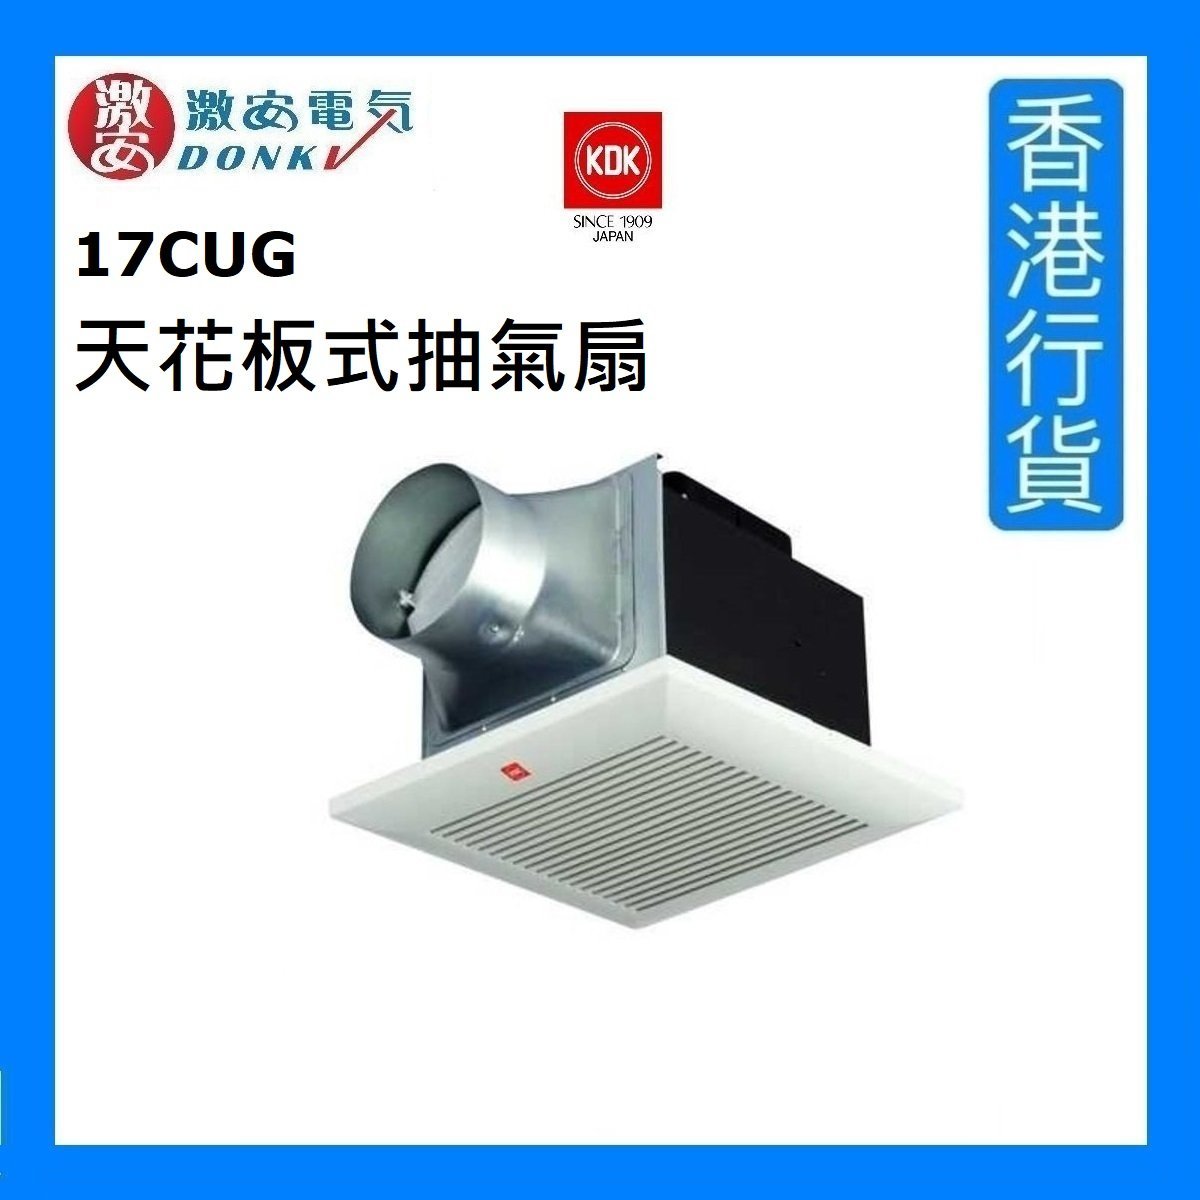 17CUG Ceiling Mount Type Ventilating Fan (Air Volume：85CMH) [Authorized Goods]